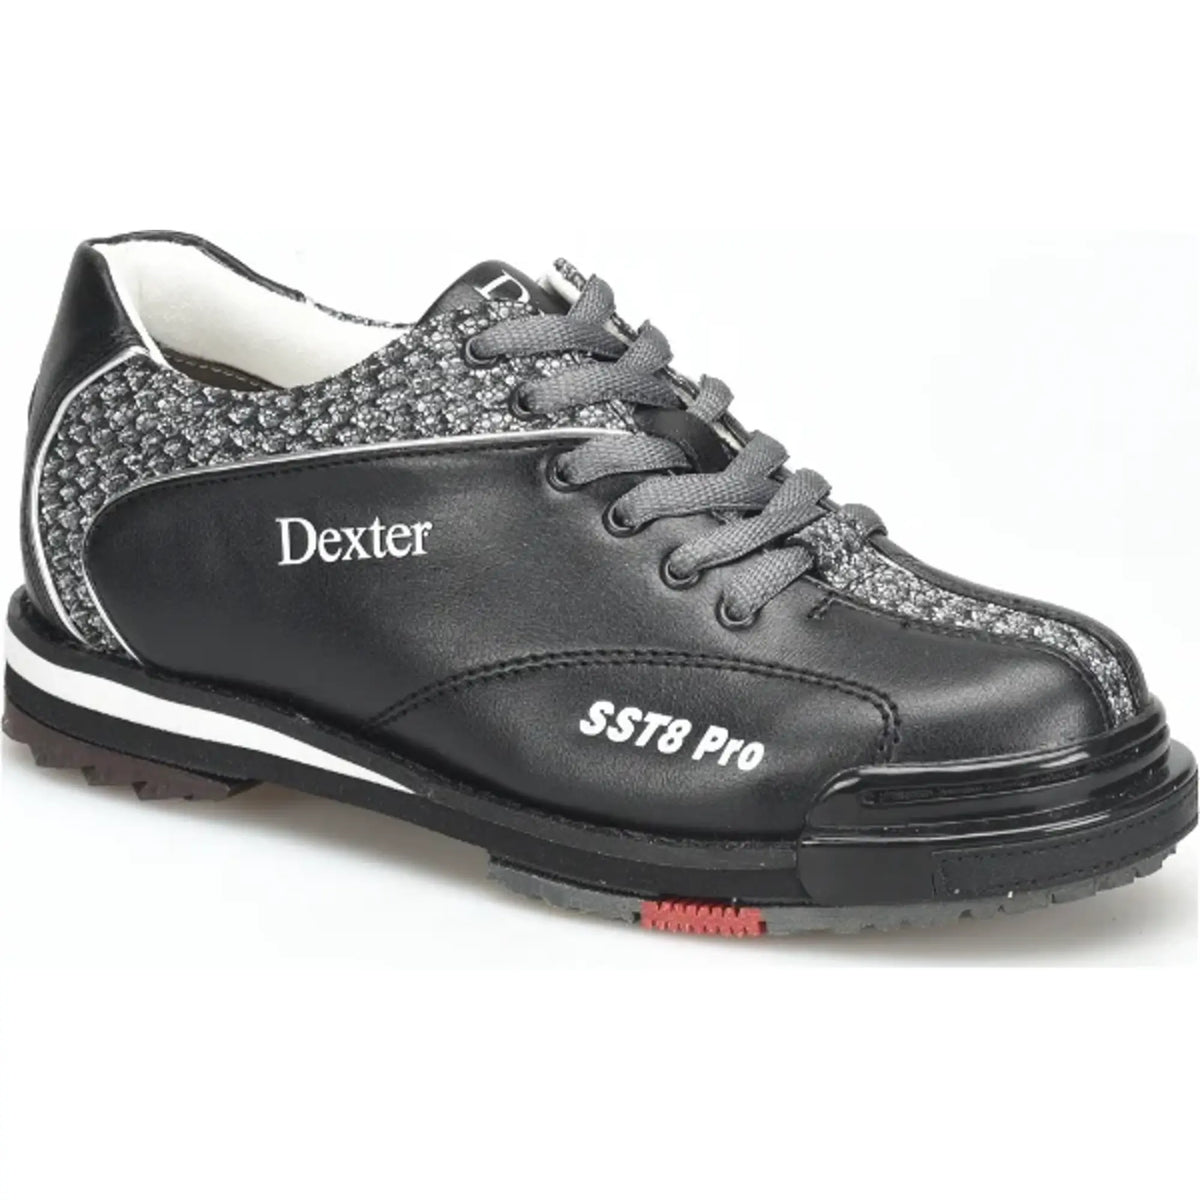 Sst 8 Pro Black/ Grey Wide Shoes